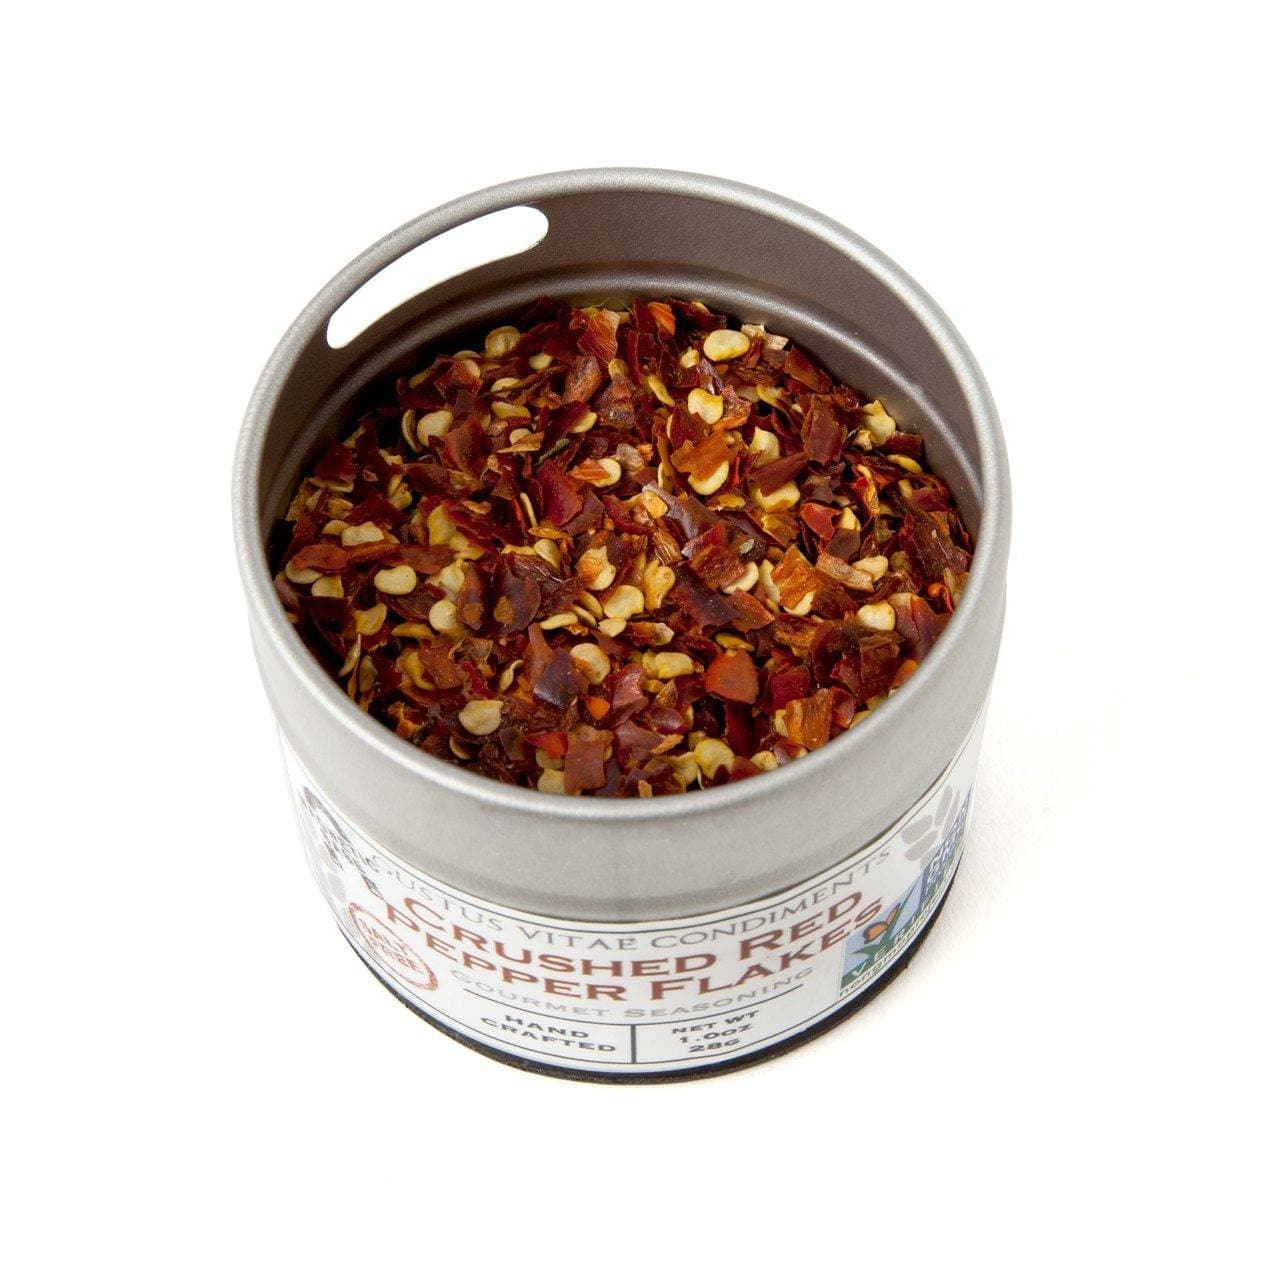 Gustus Vitae Savory English-Style Salt and Vinegar Seasoning (2.0 oz (56 g) Shaker Magnetic Base can)